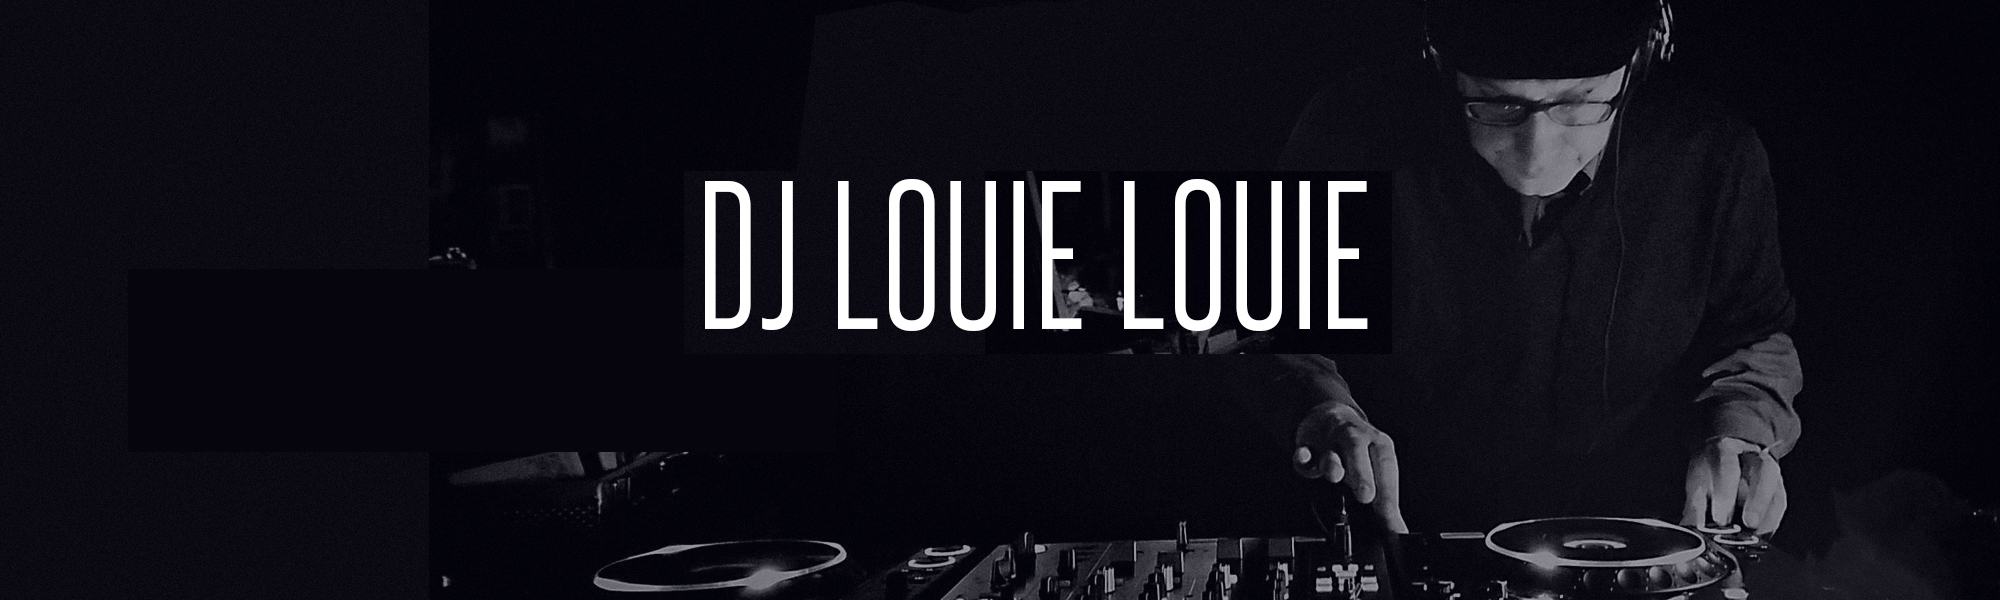 DJ LOUIE LOUIE